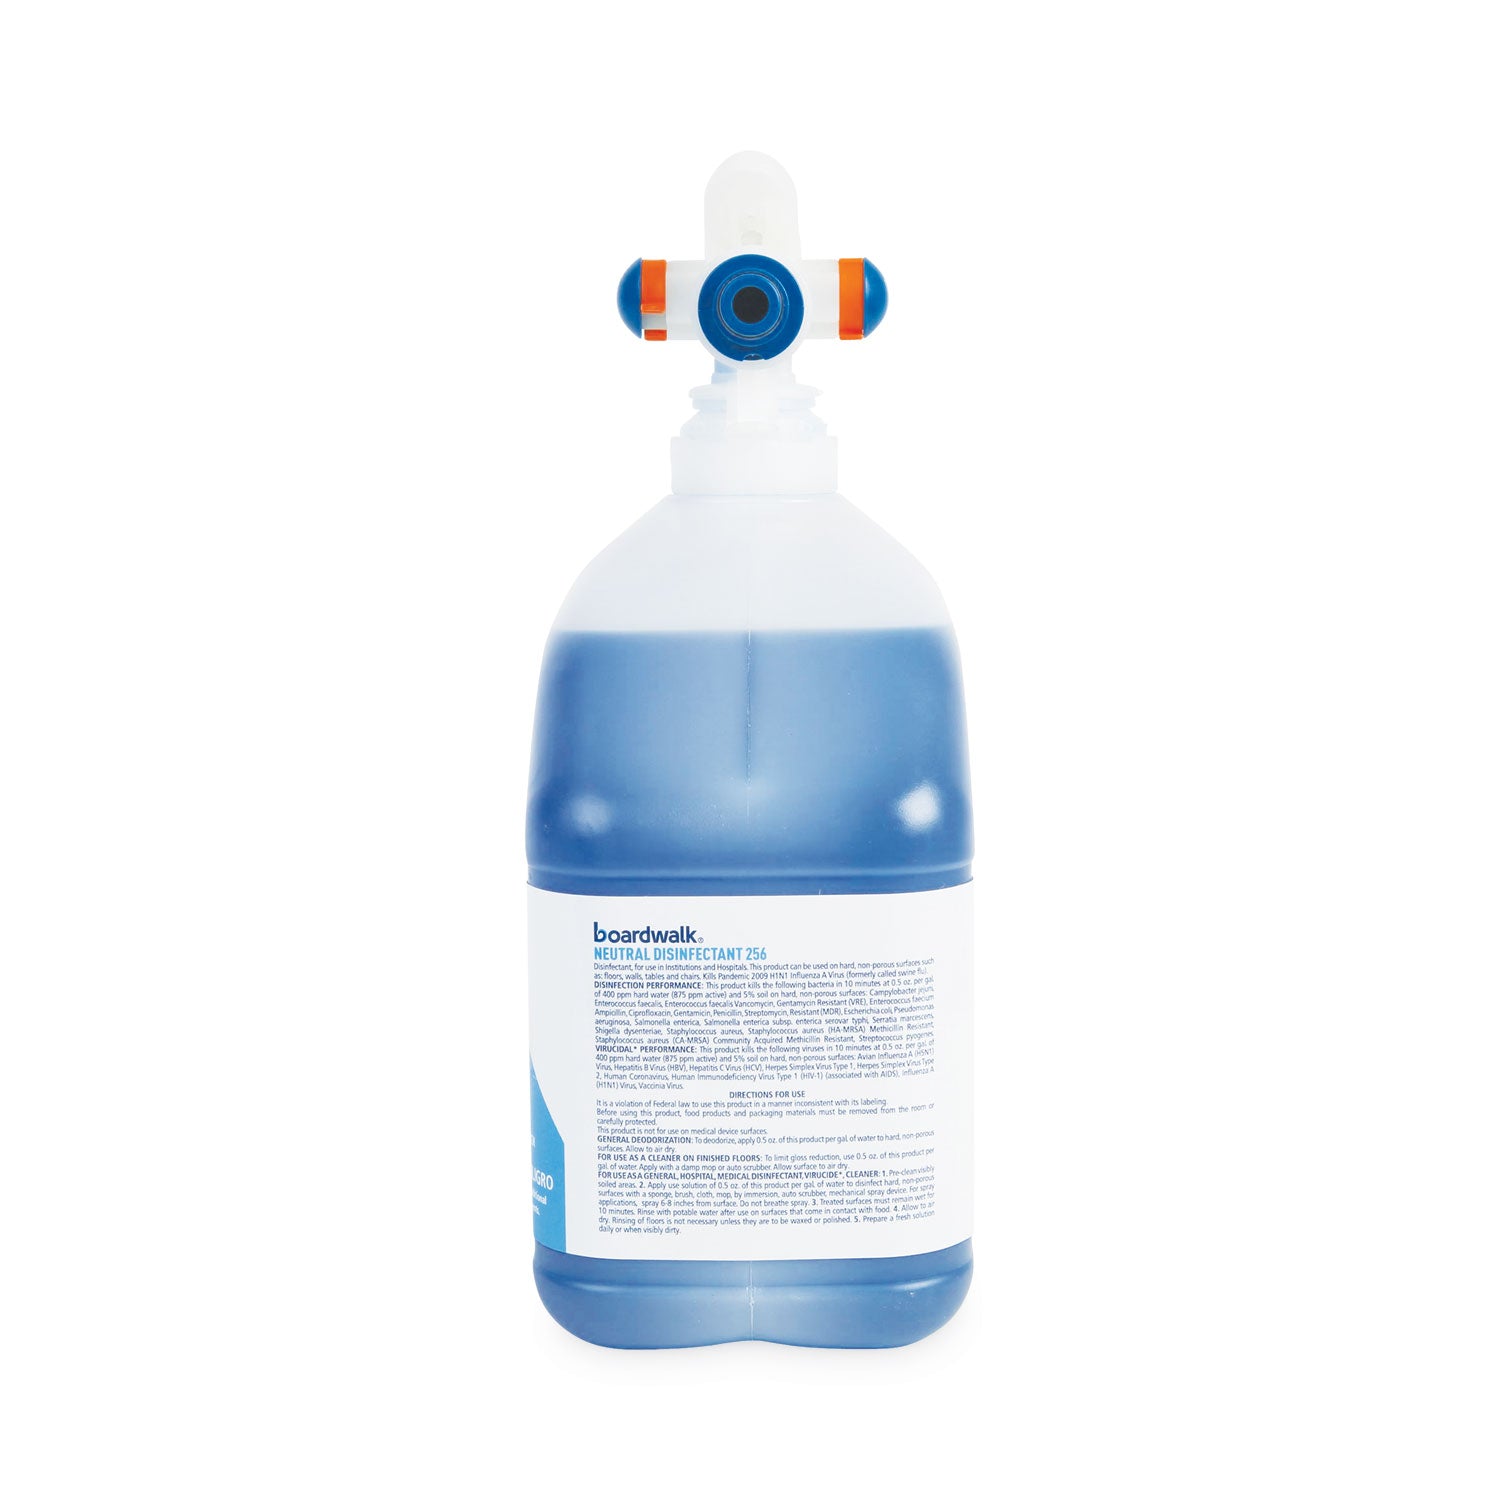 pdc-neutral-disinfectant-floral-scent-3-liter-bottle-2-carton_bwk4815 - 5